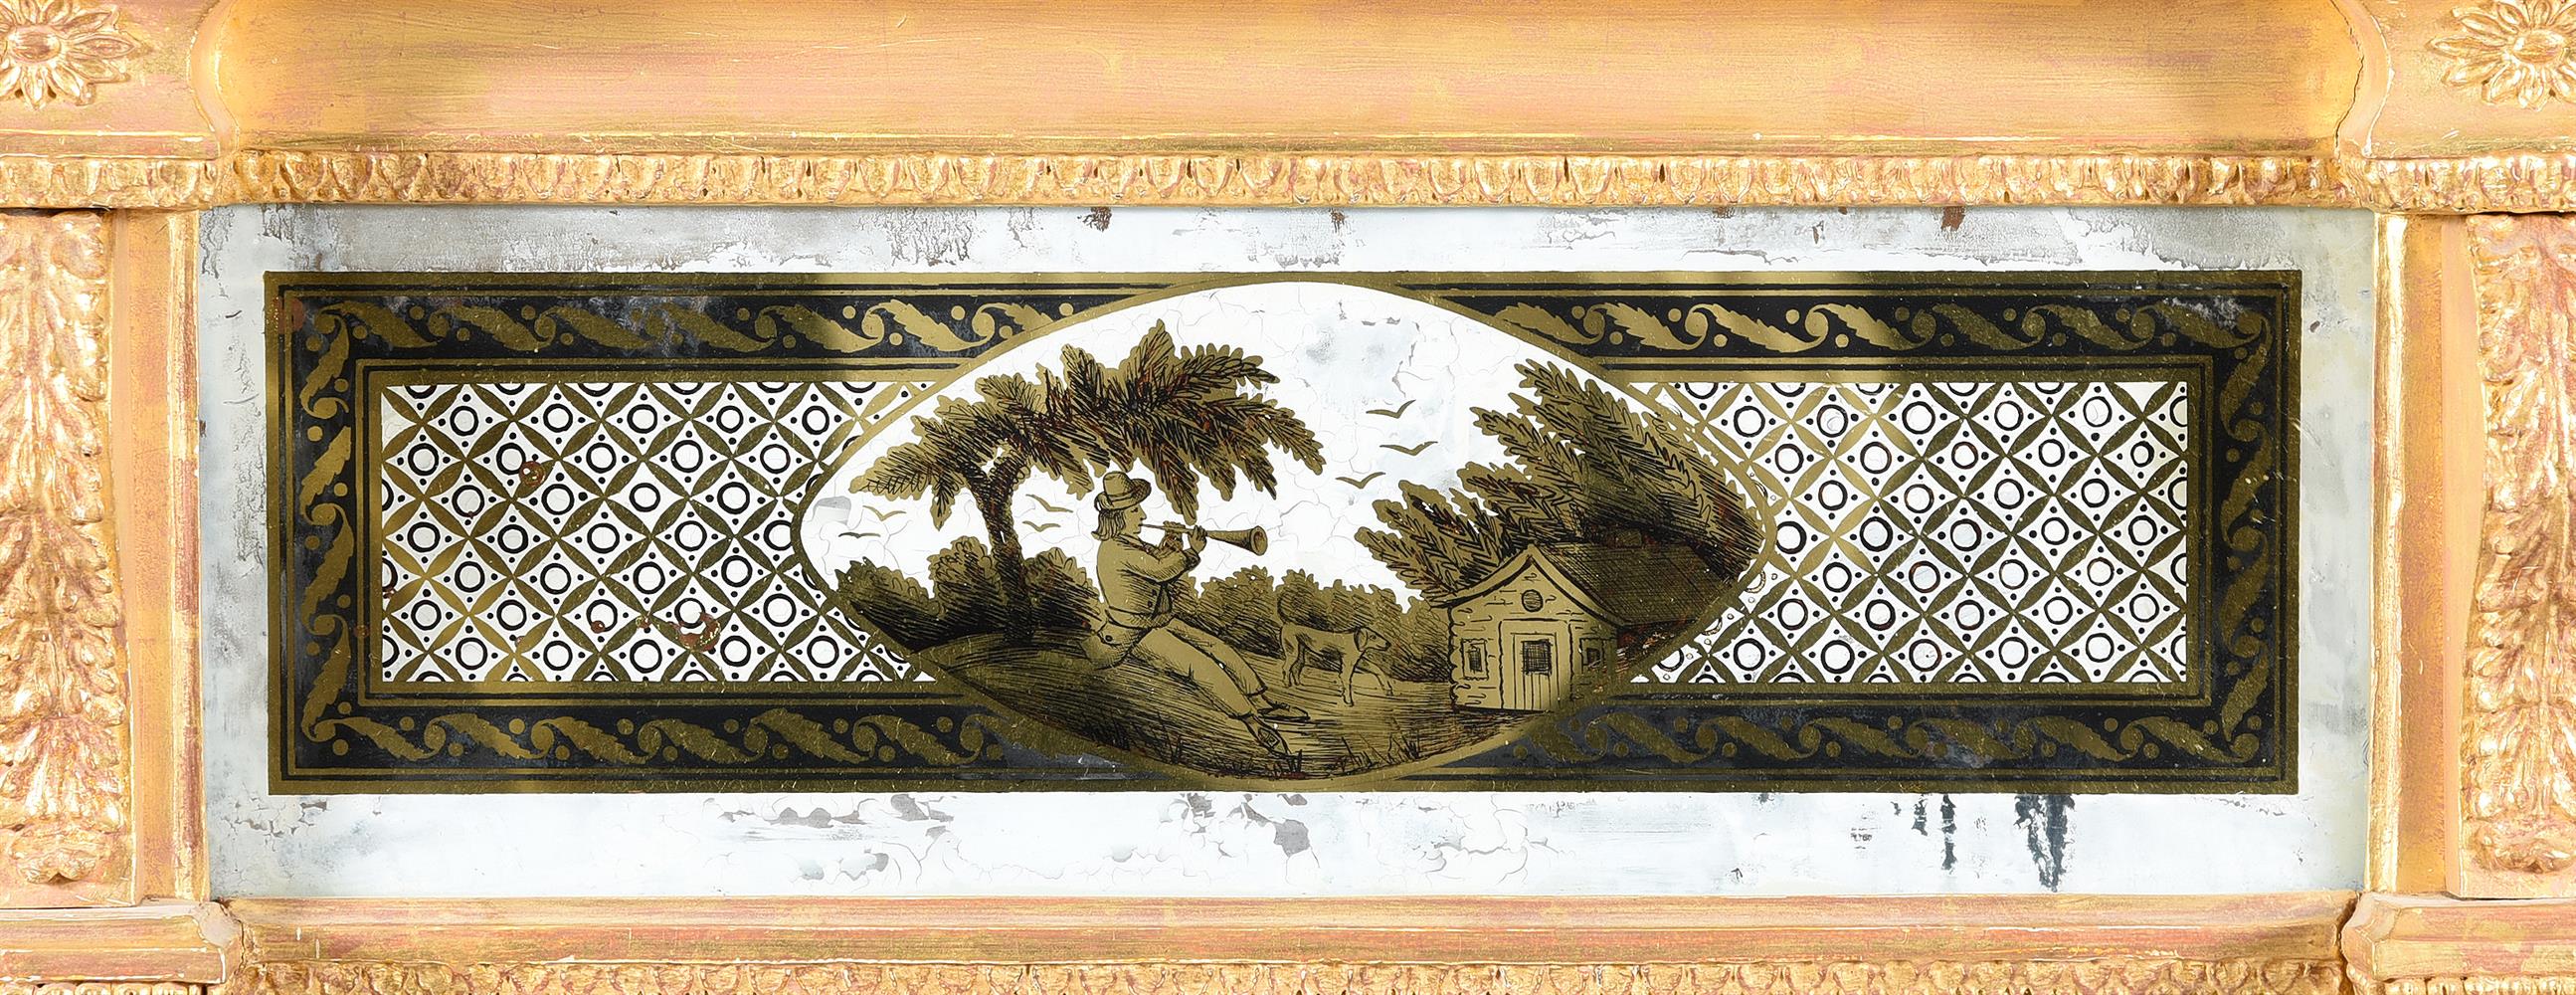 A REGENCY GILTWOOD WALL MIRROR, CIRCA 1820 - Image 2 of 3